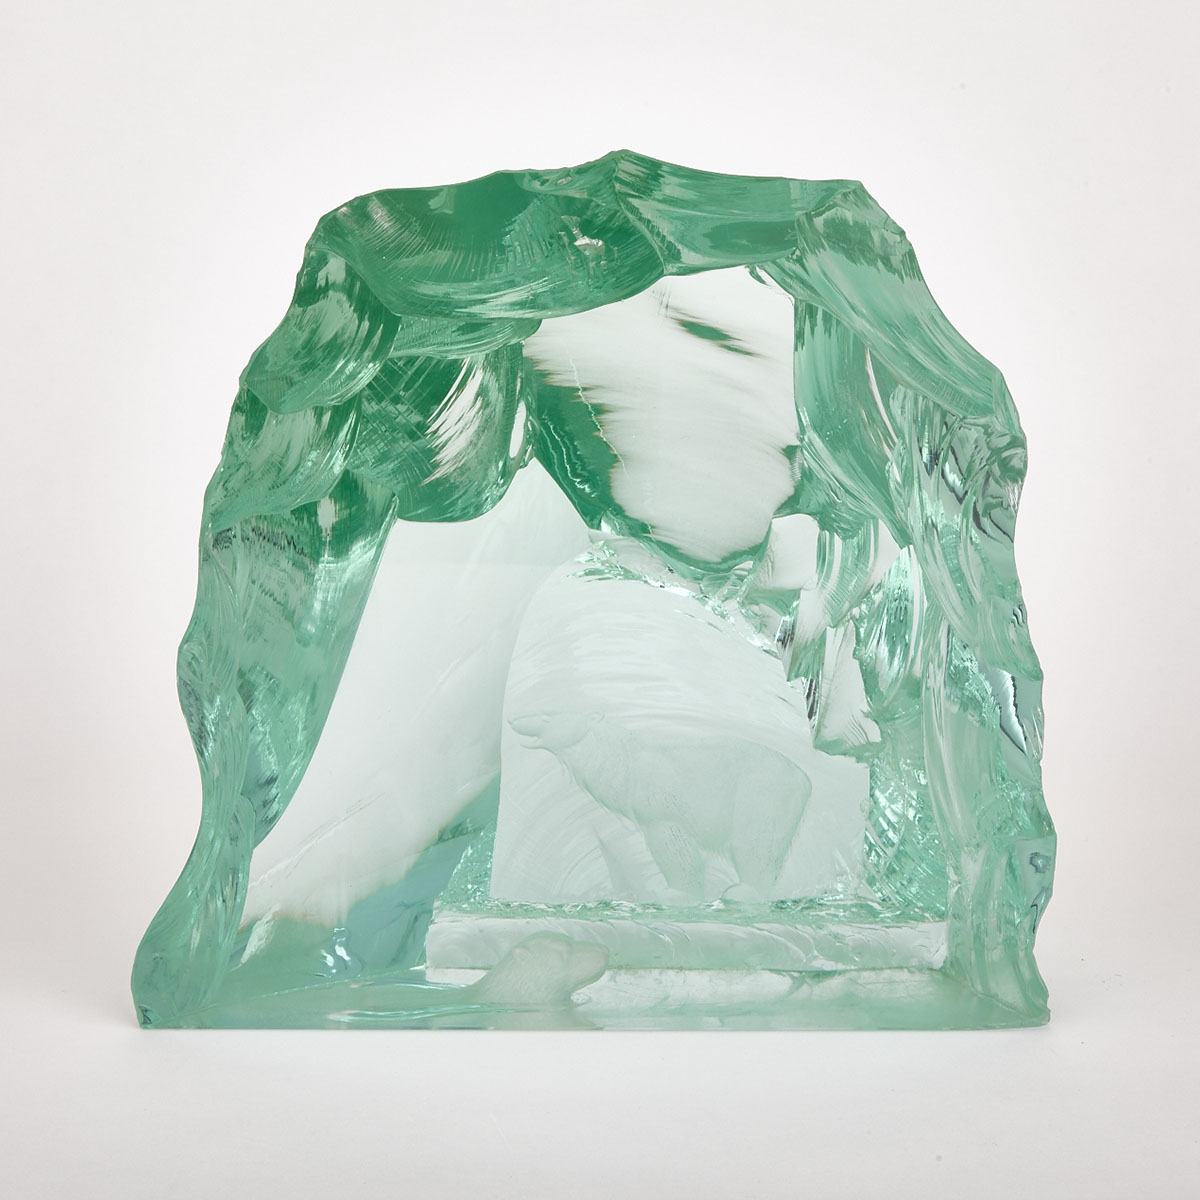 Kosta Polar Bear ‘Ice Block’ Engraved Glass Sculpture, Vicke Lindstrand, c.1960